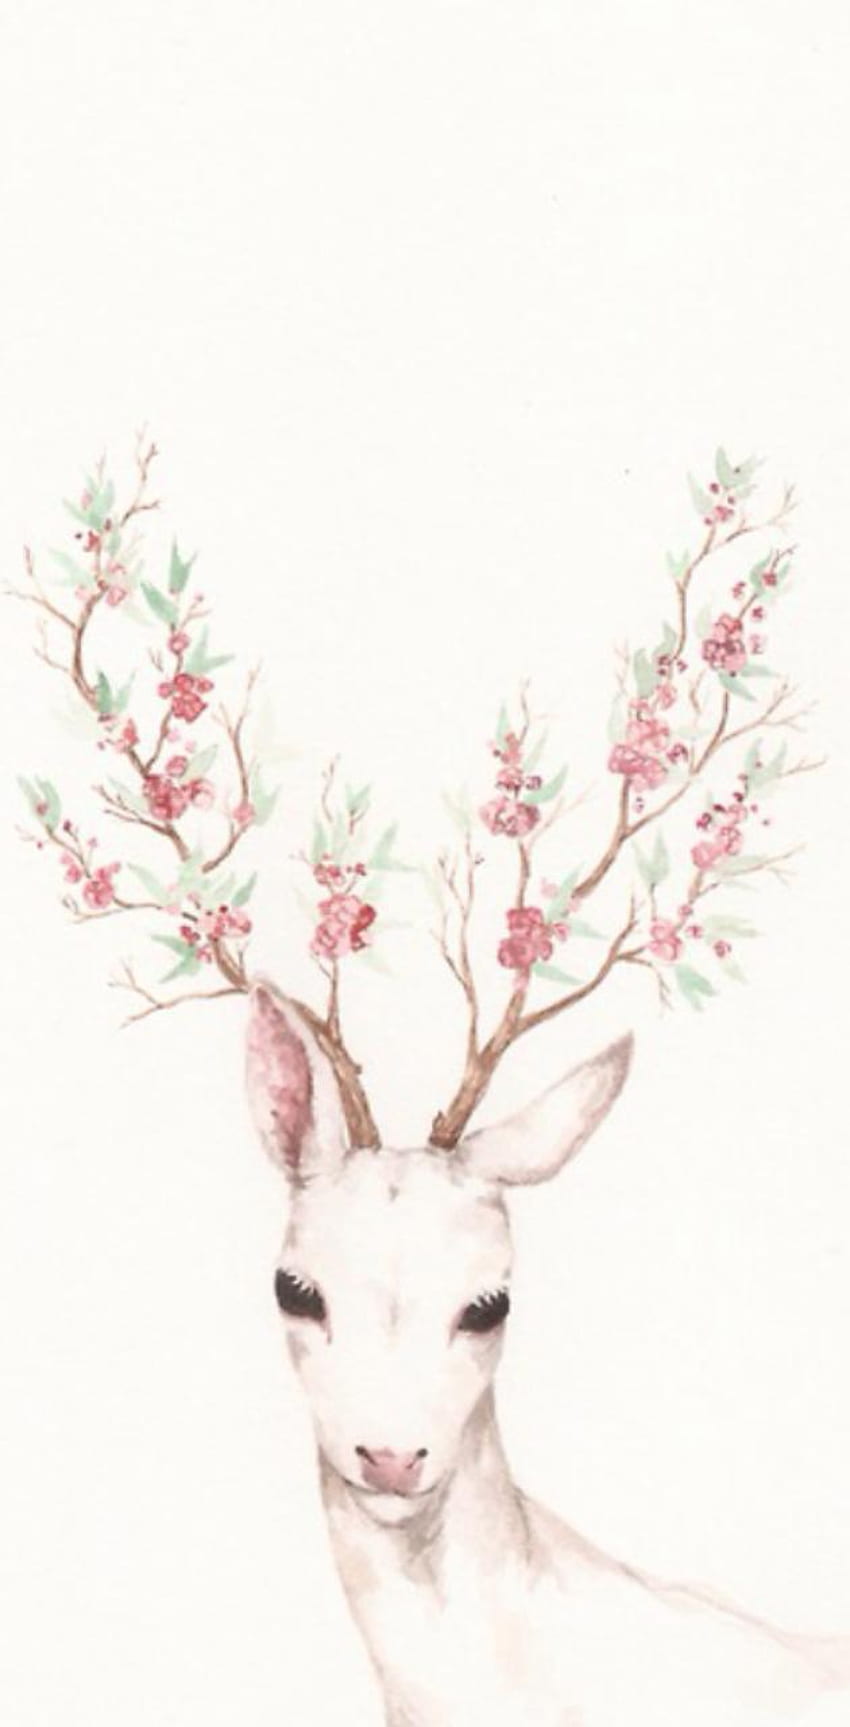 IPhone wallpaper of a deer with flowers on its antlers - Deer